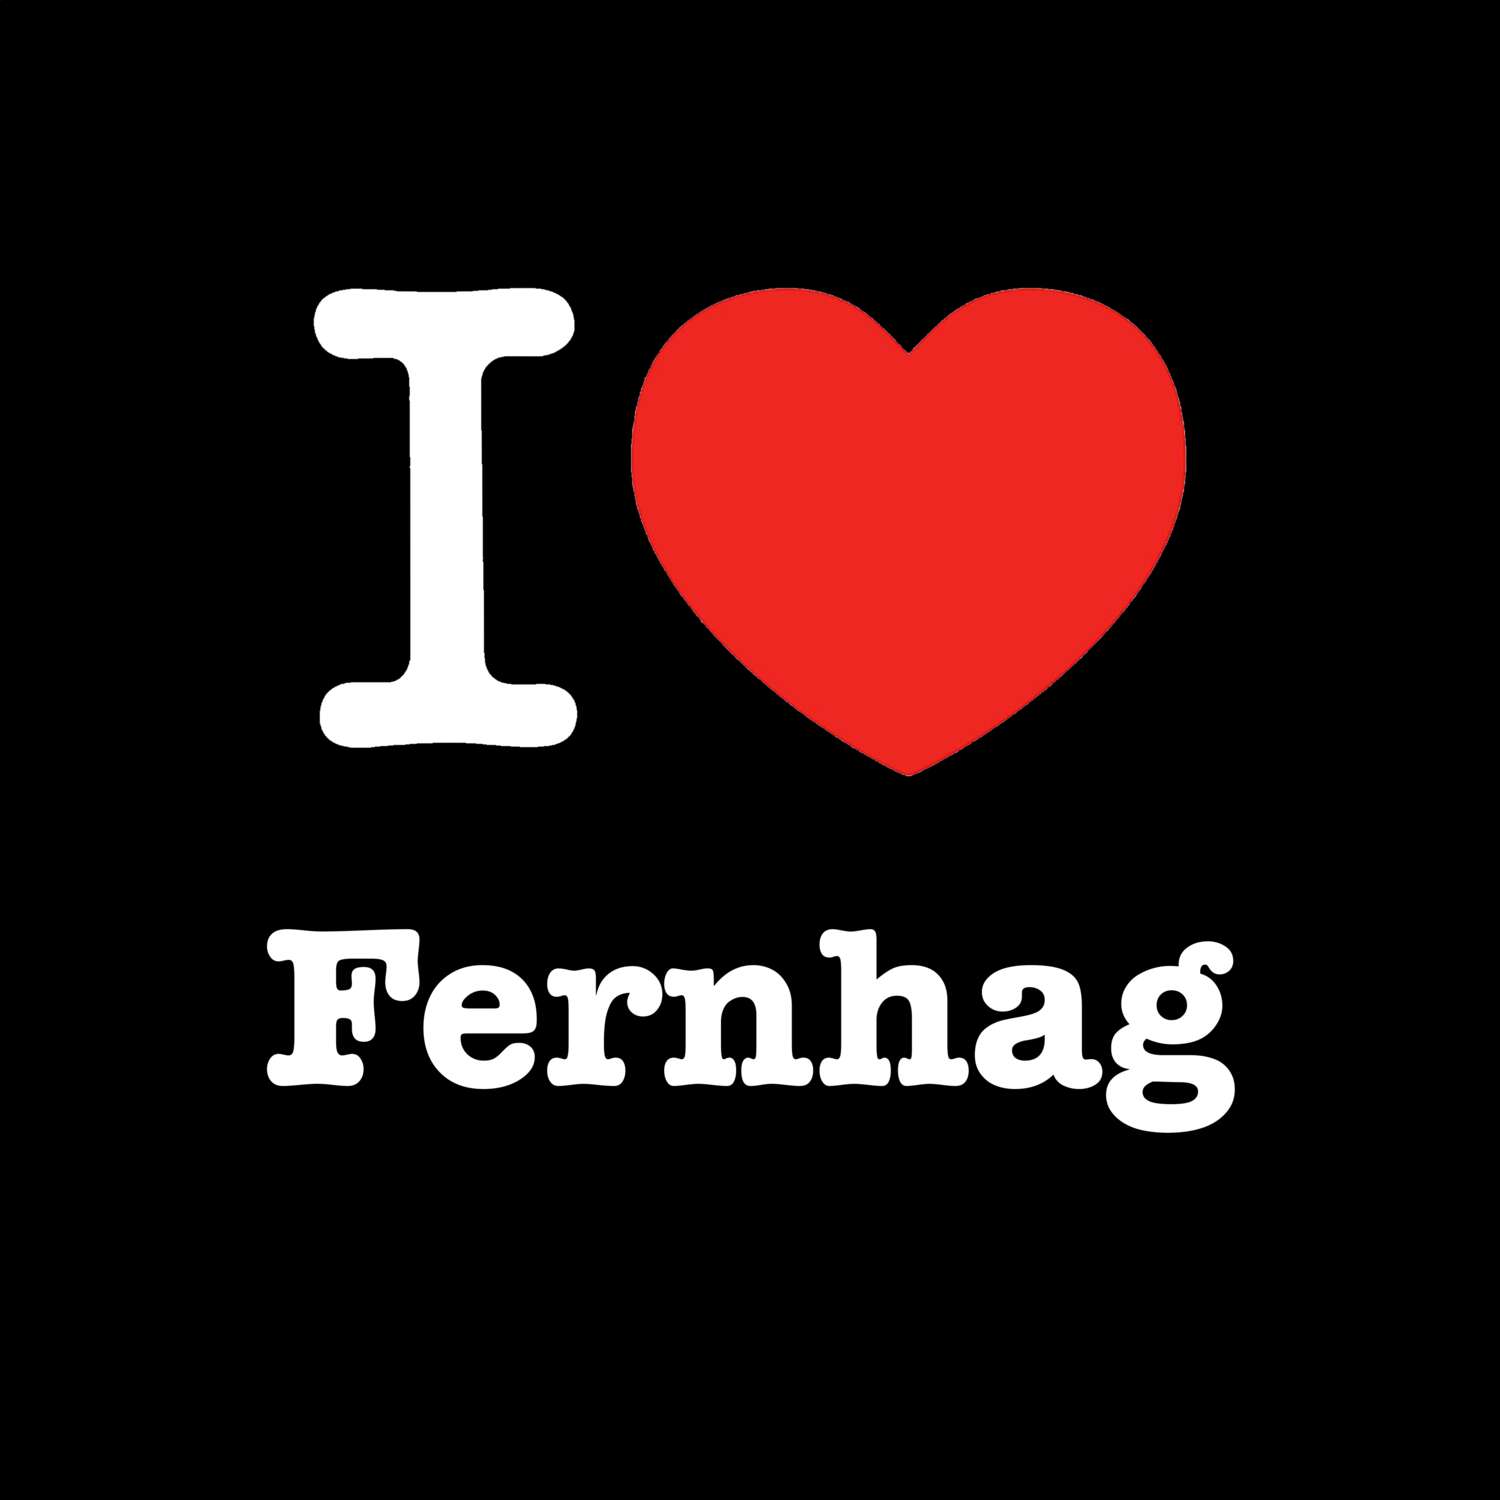 Fernhag T-Shirt »I love«